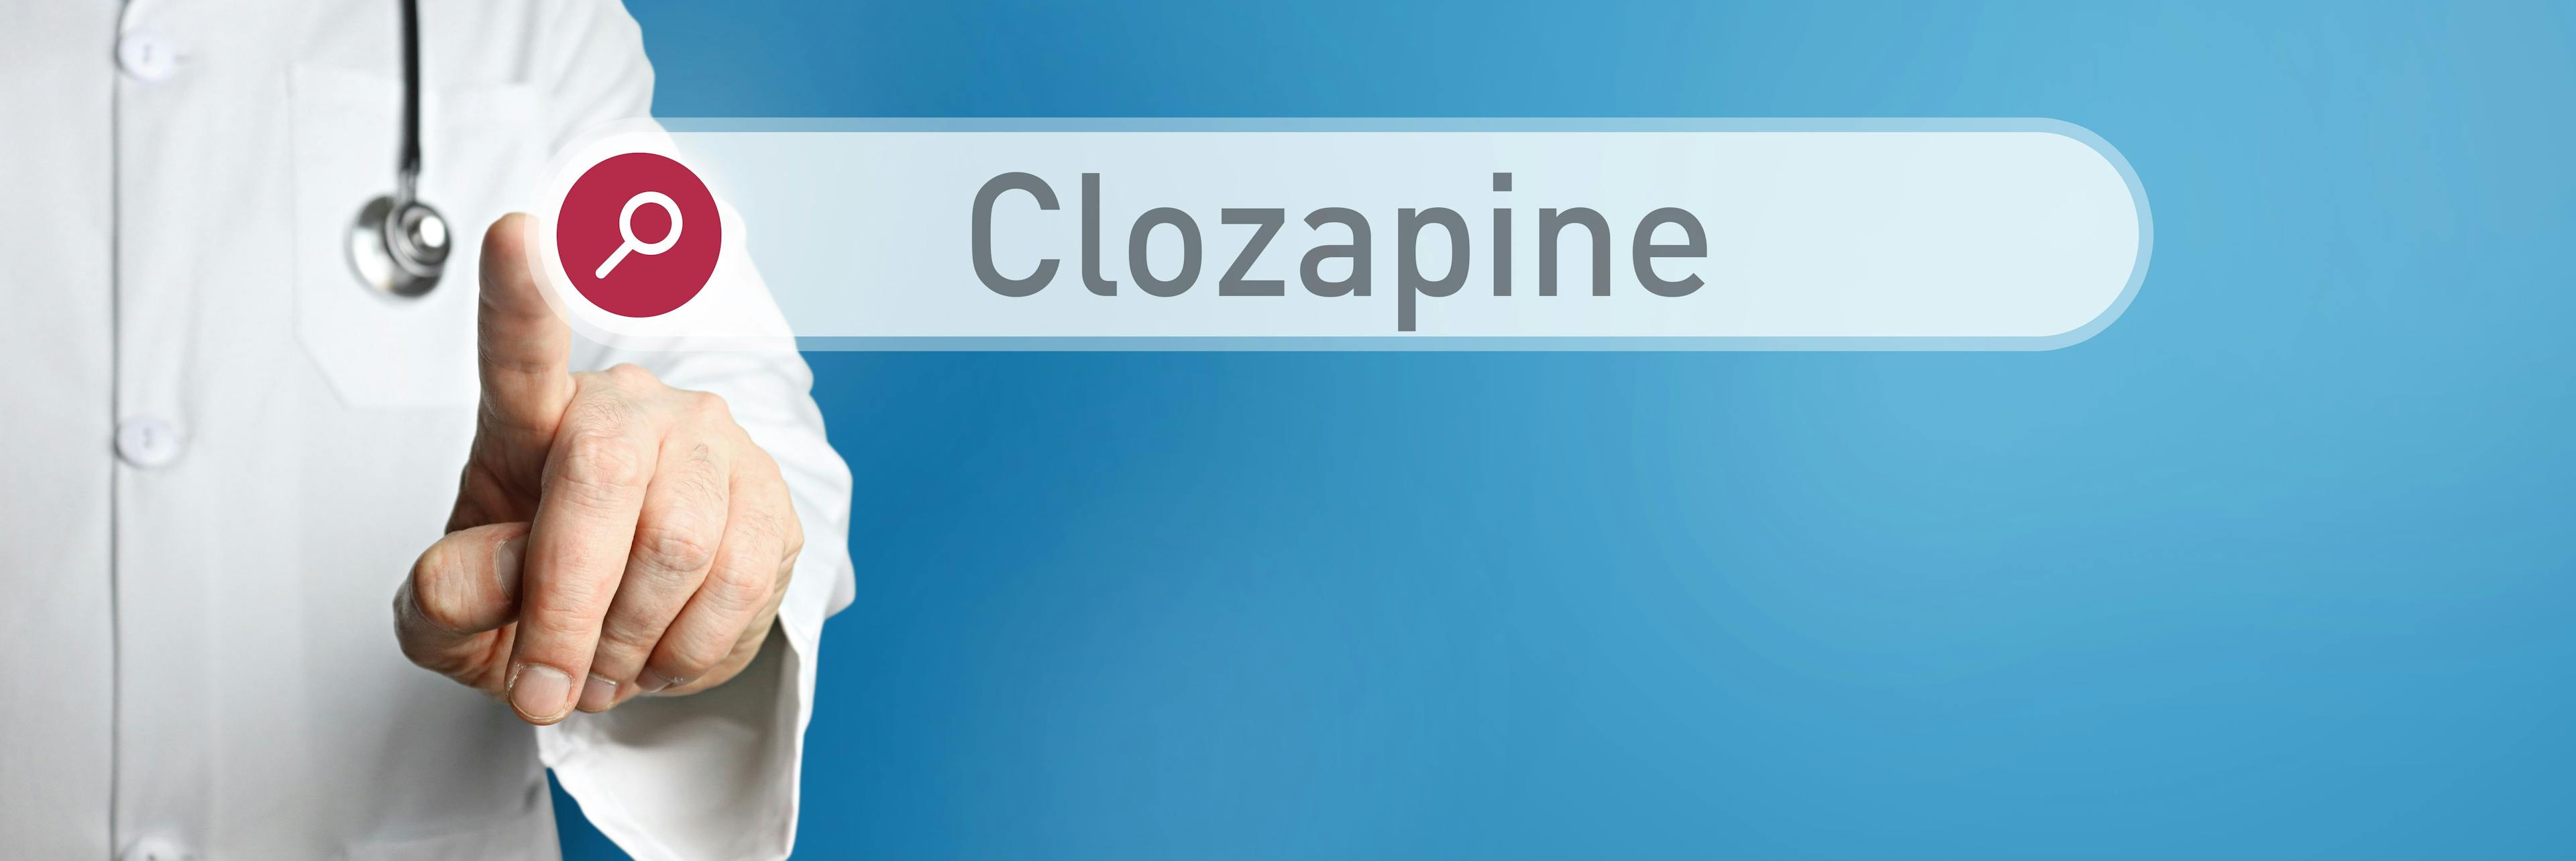 FDA Updates Clozapine REMS Program